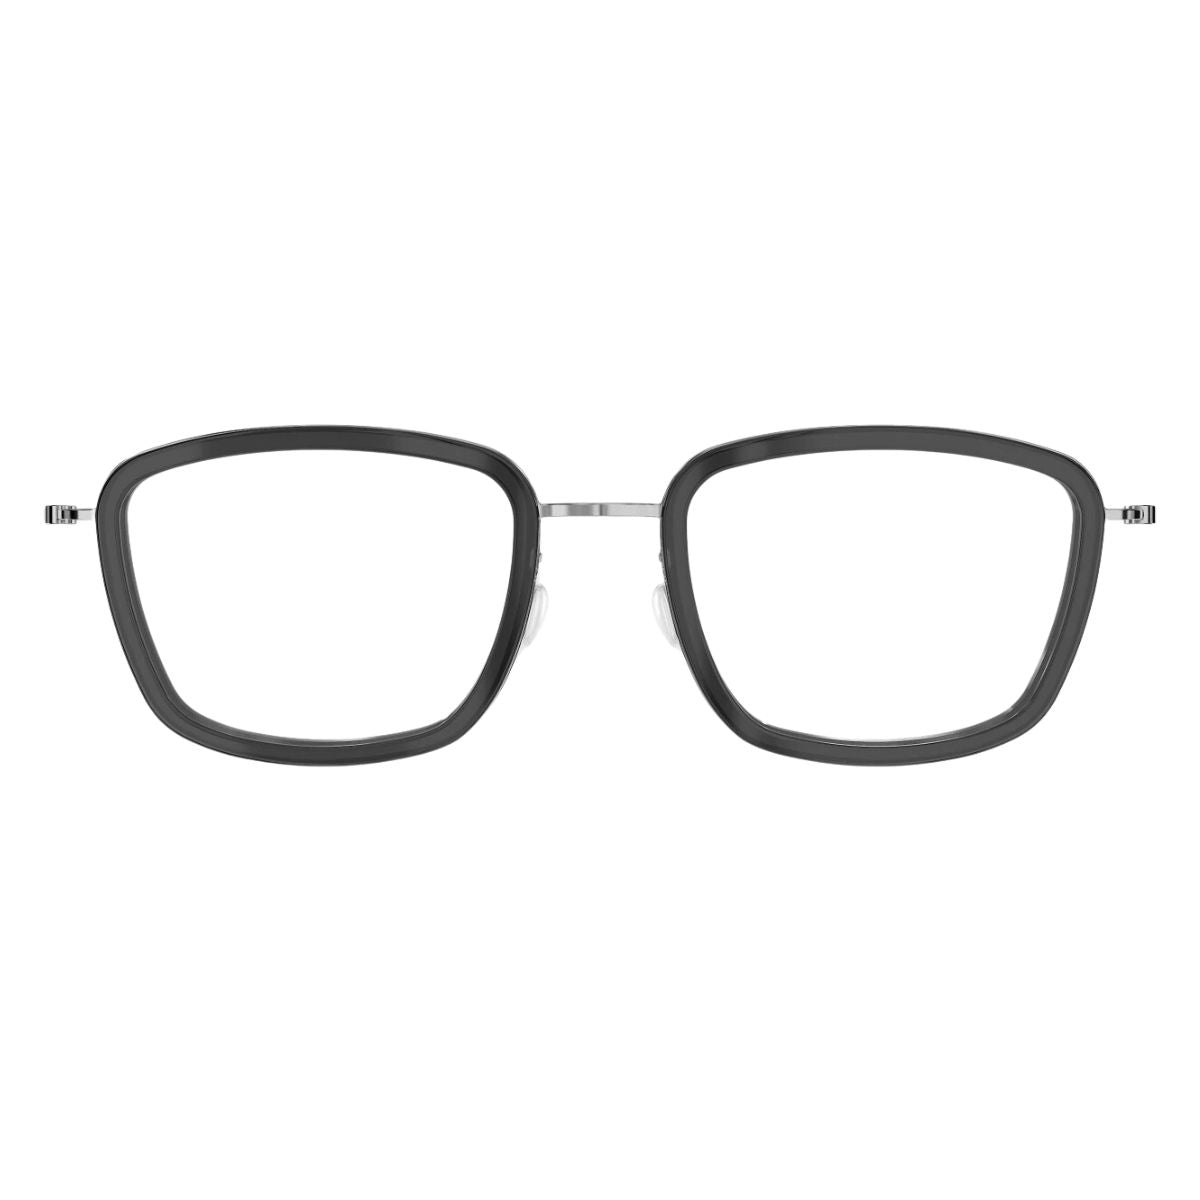 "Shop Latest Lindberg Eyewear 5807 P10 Optical Frames For Men & Women"